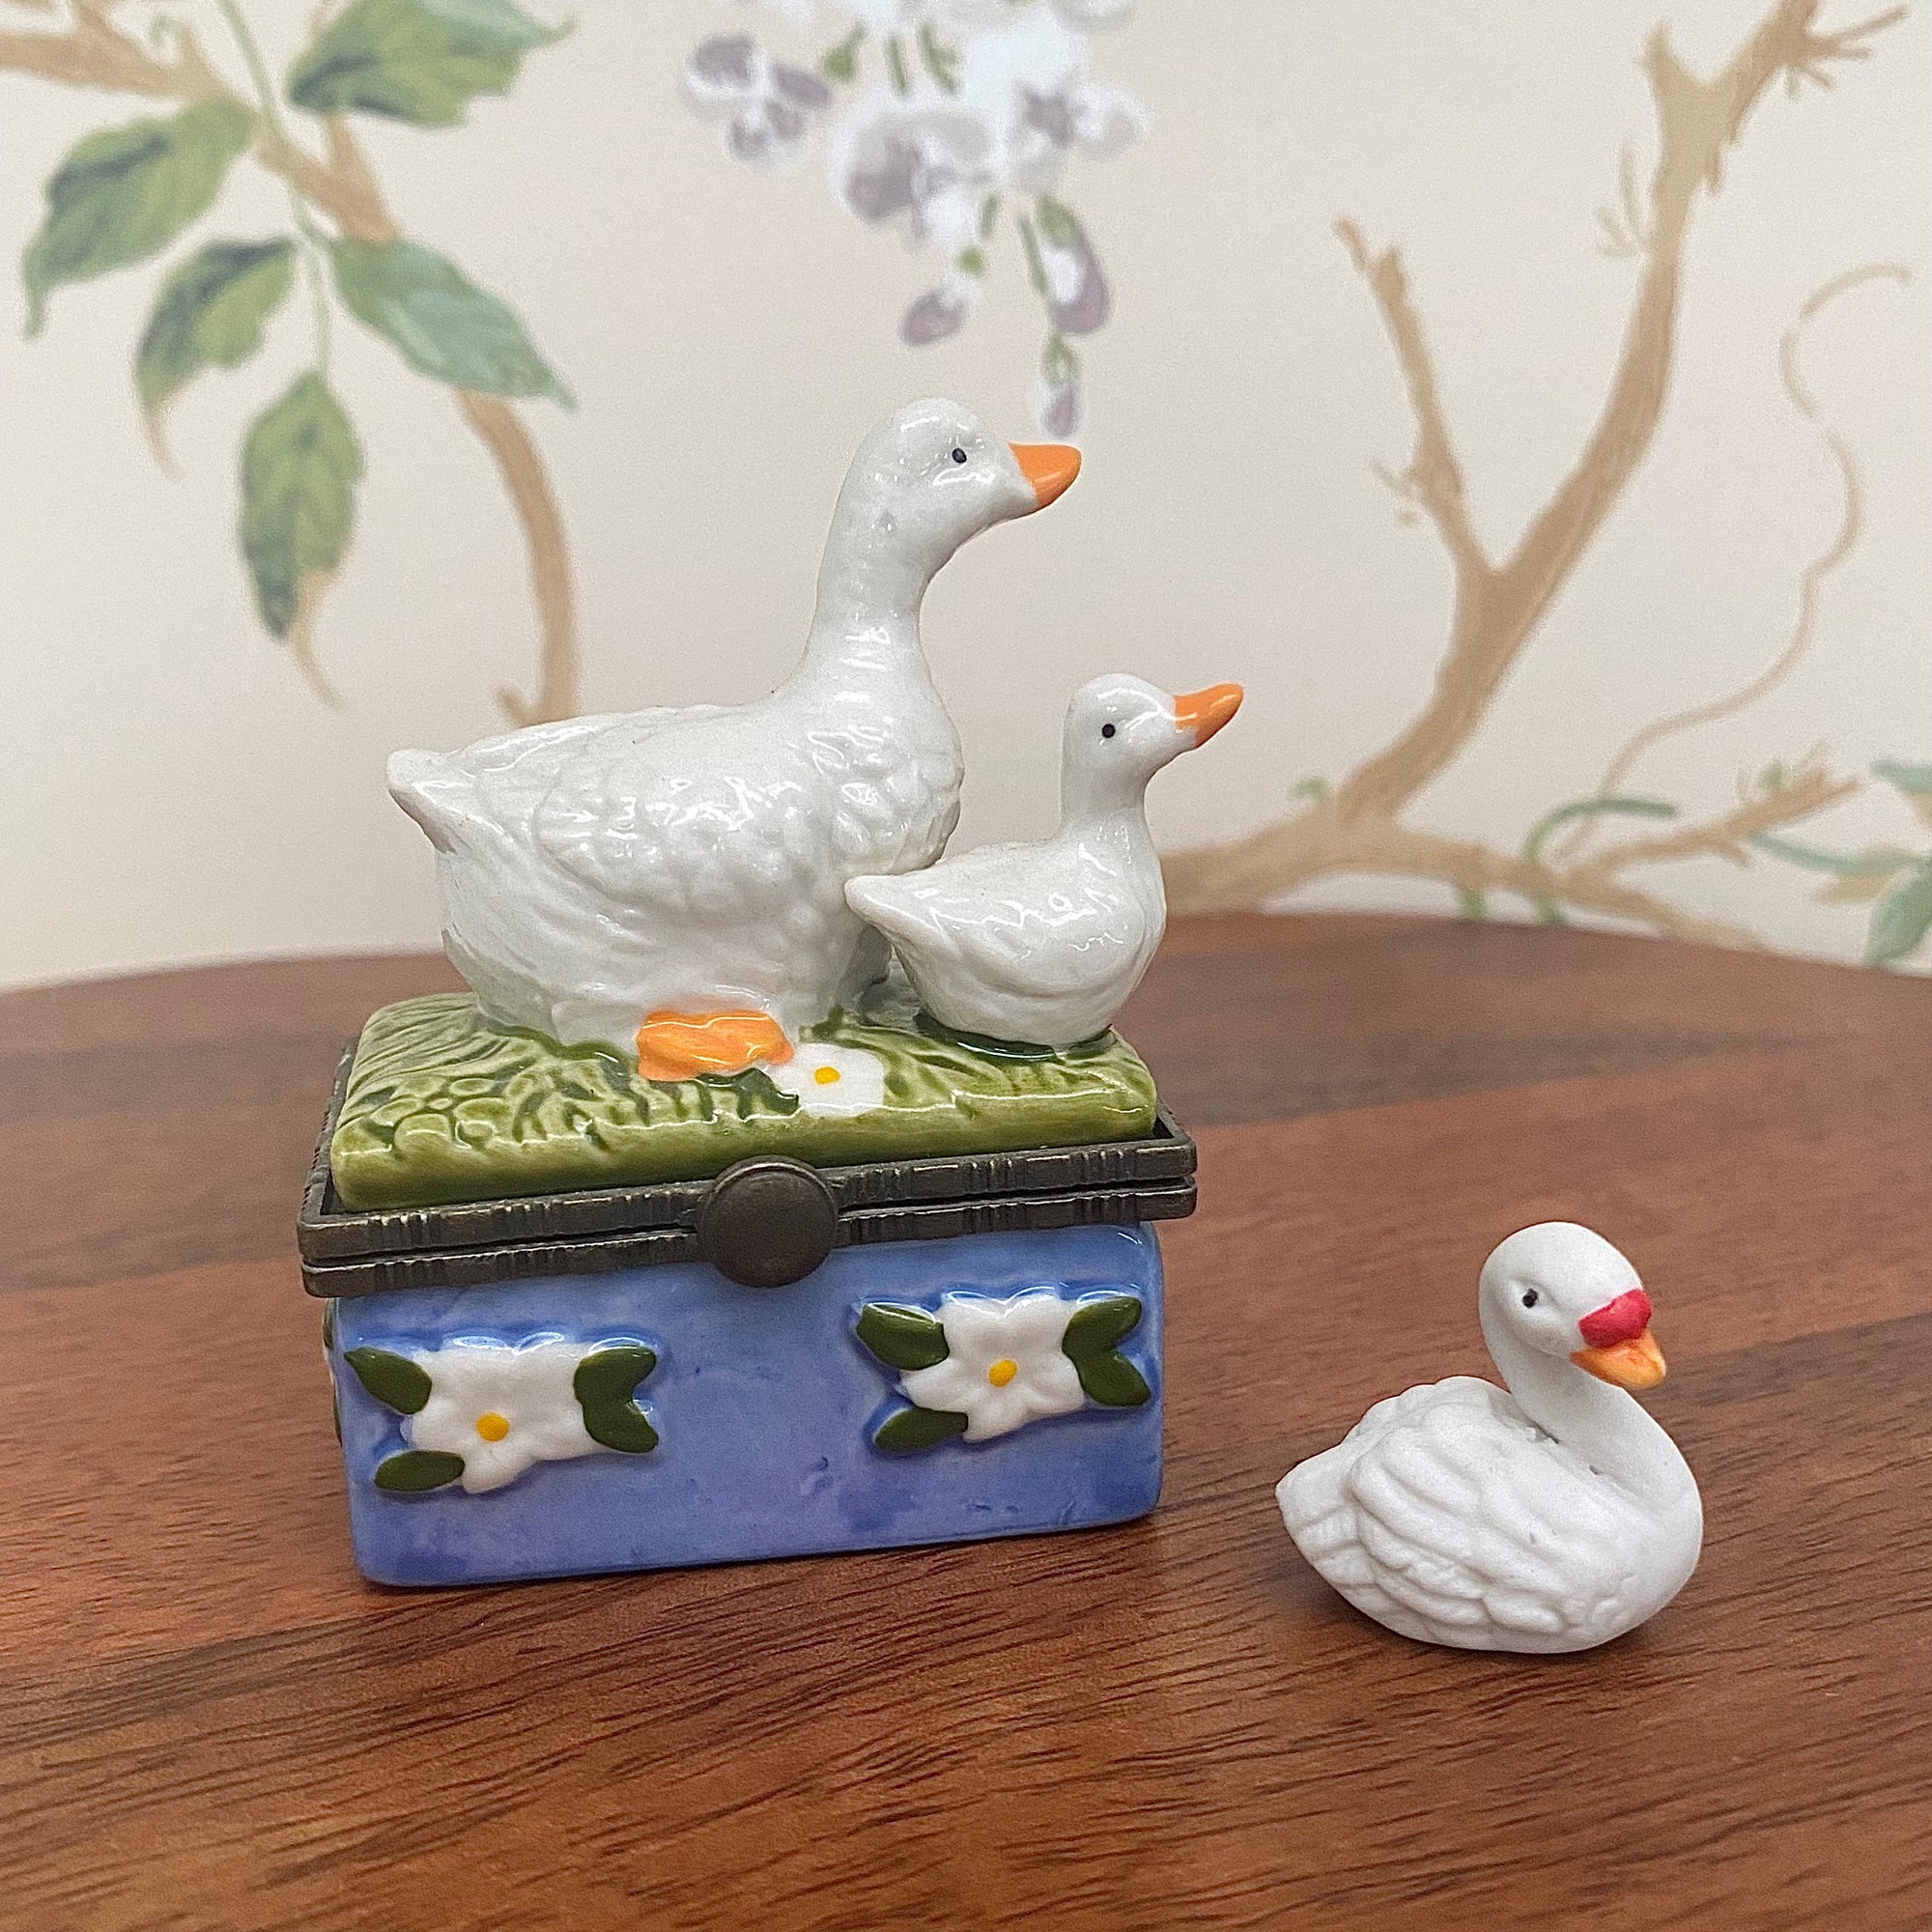 Duck ceramic box with hidden duckling trinket